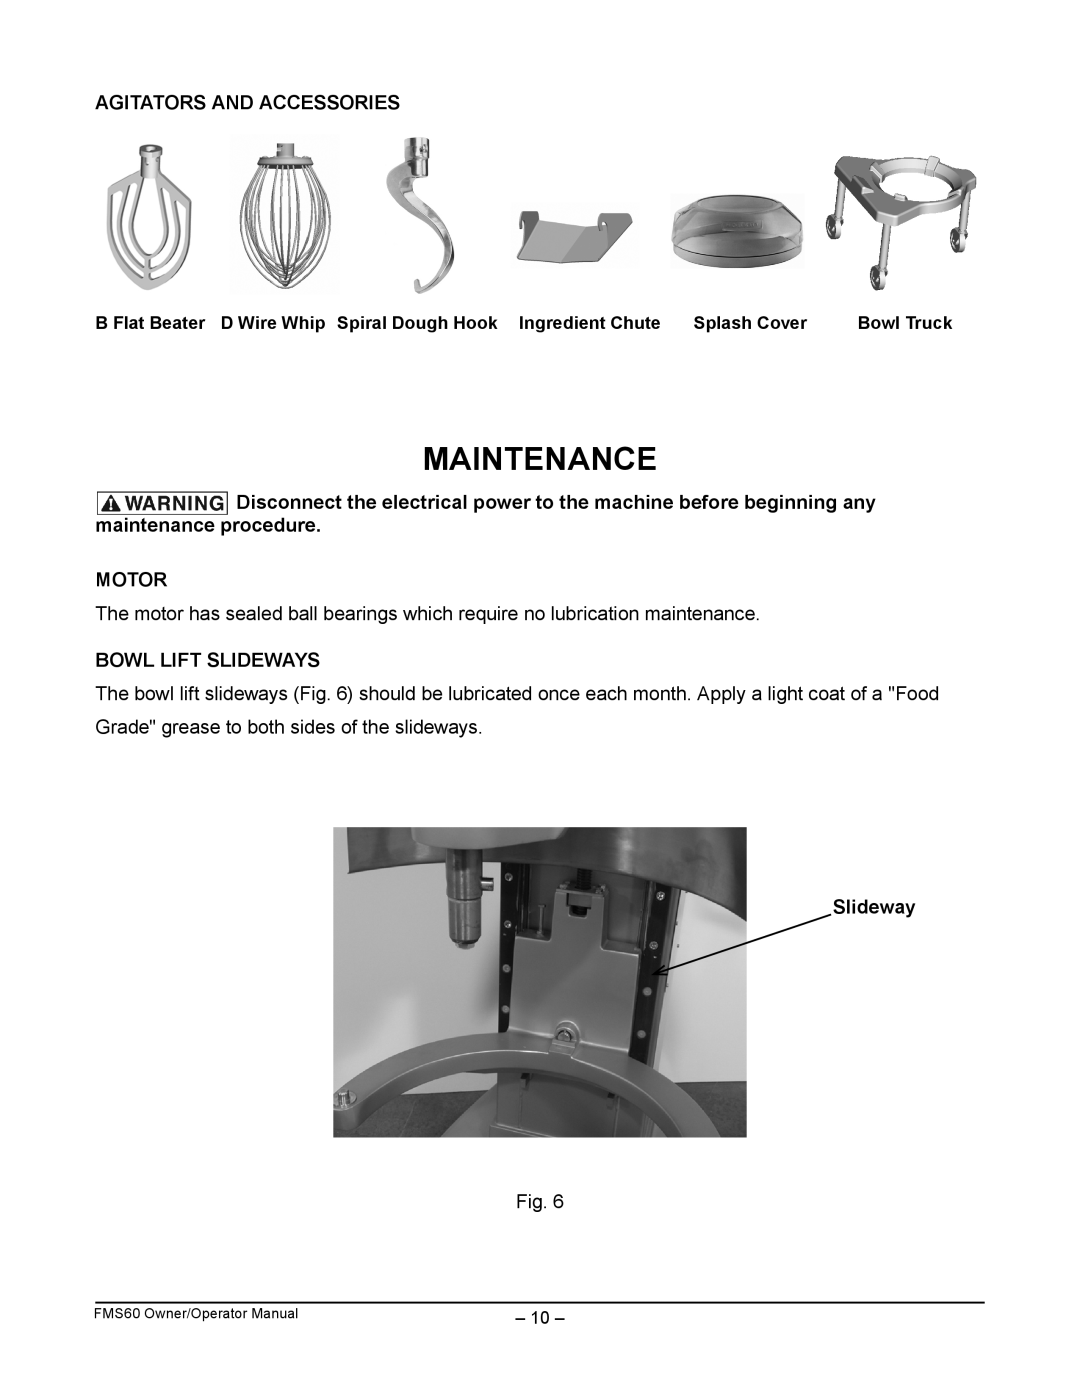 Berkel FMS60 manual Maintenance, Agitators And Accessories, Motor, Bowl Lift Slideways 